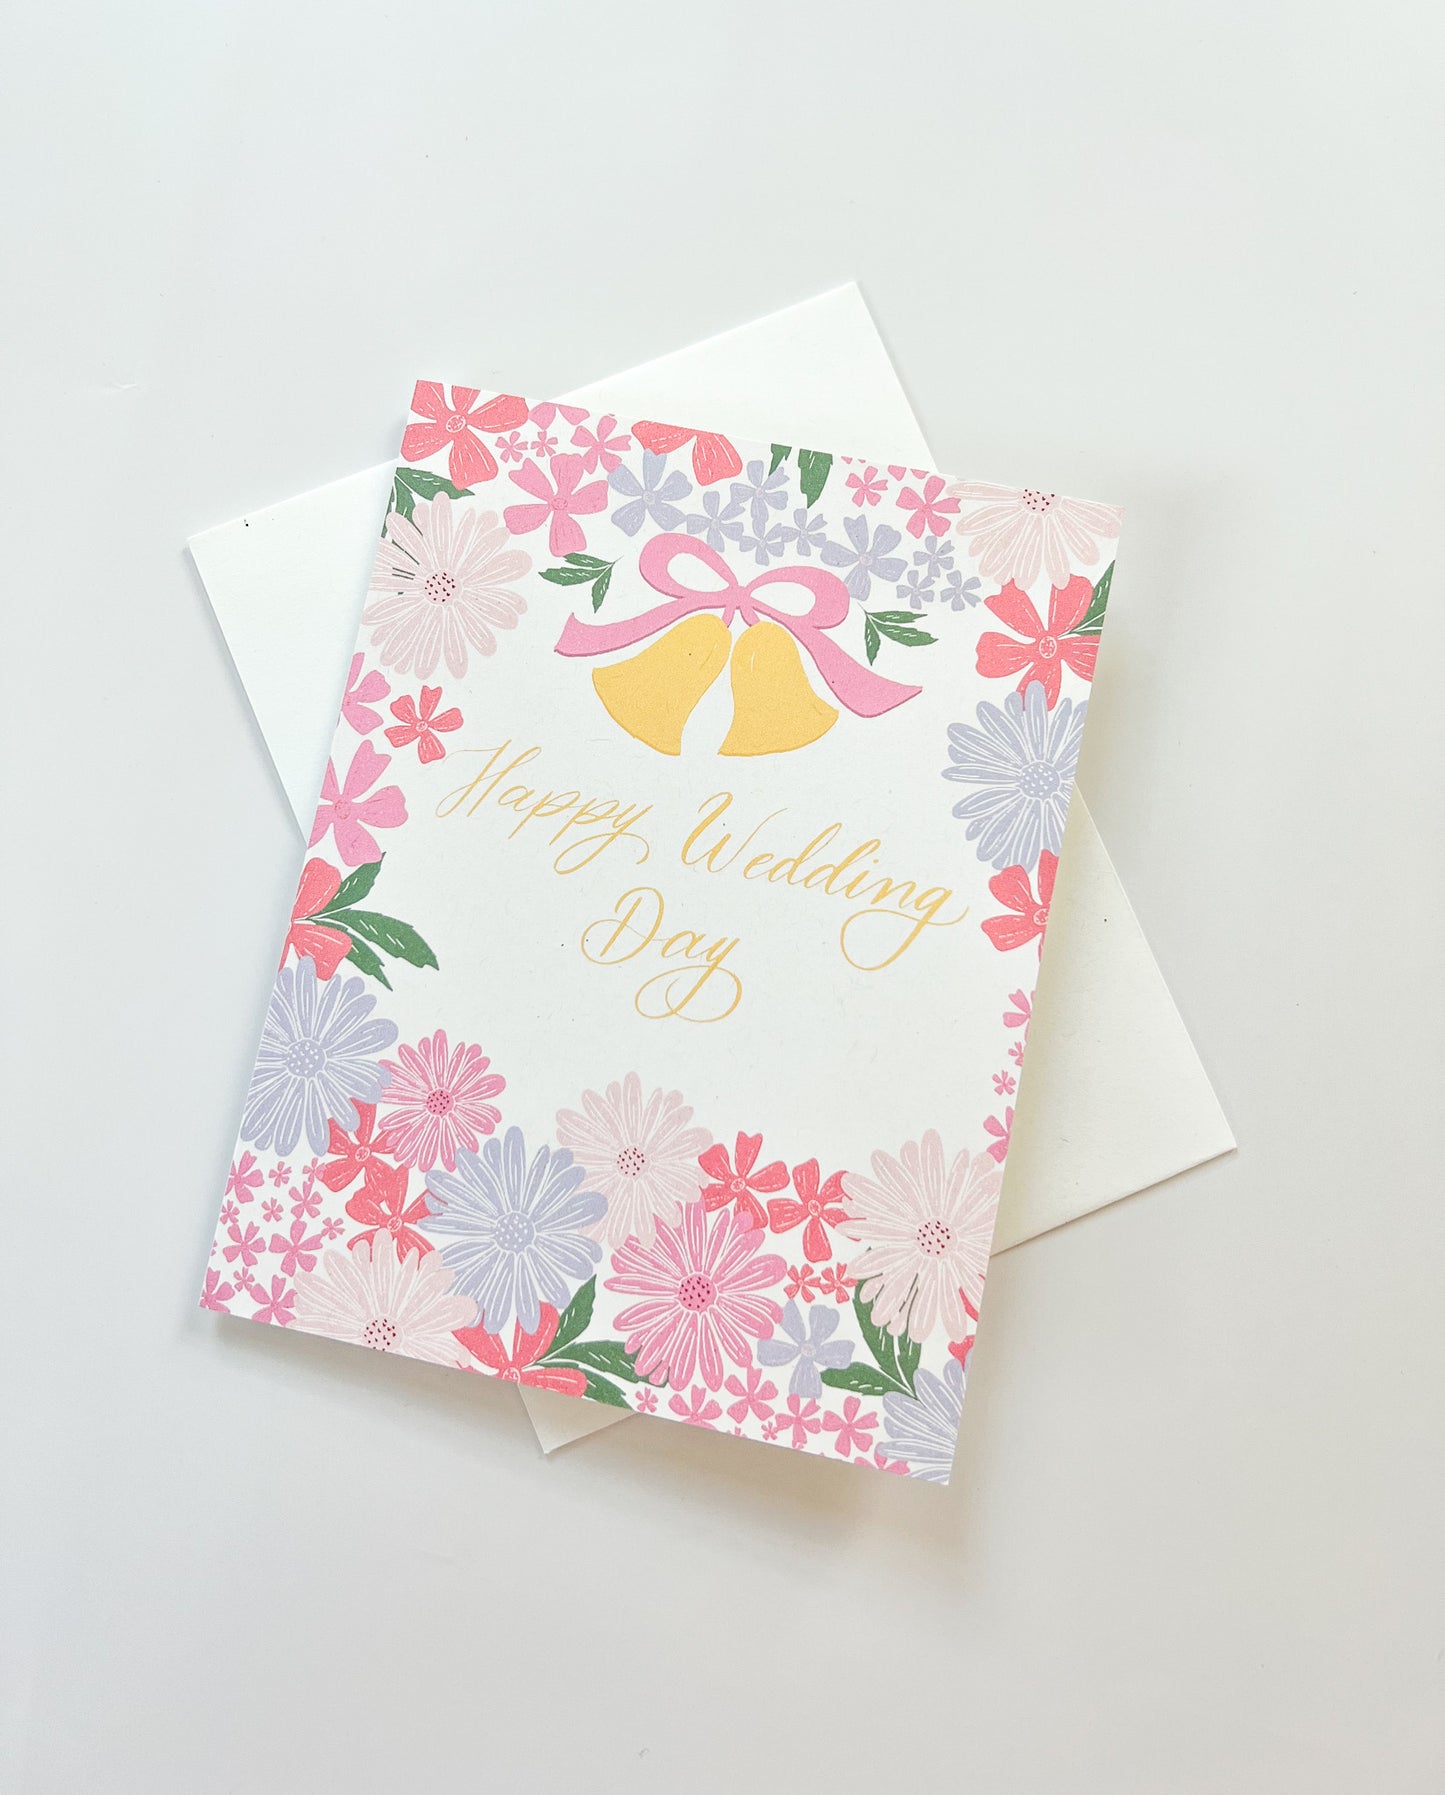 elegant wedding card for friend with flowers